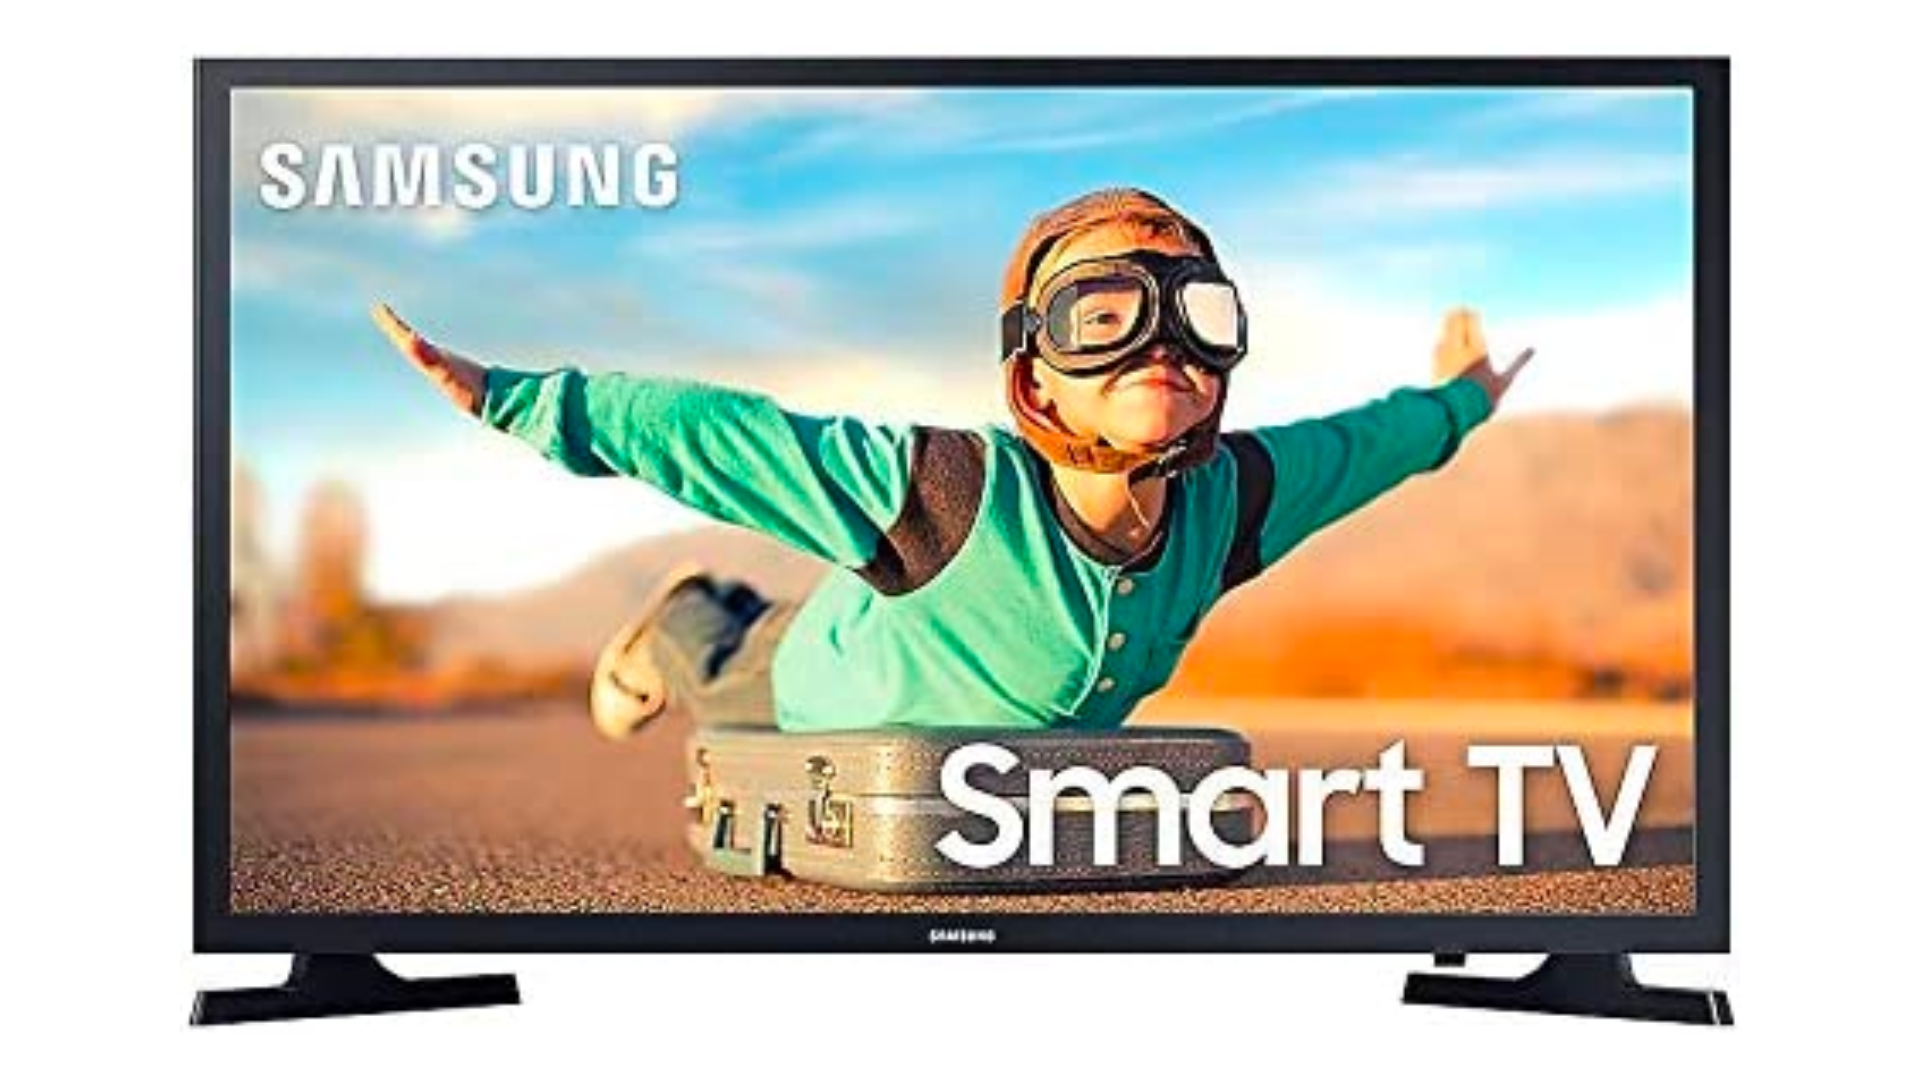 Smart TV LED 32'' HD Samsung